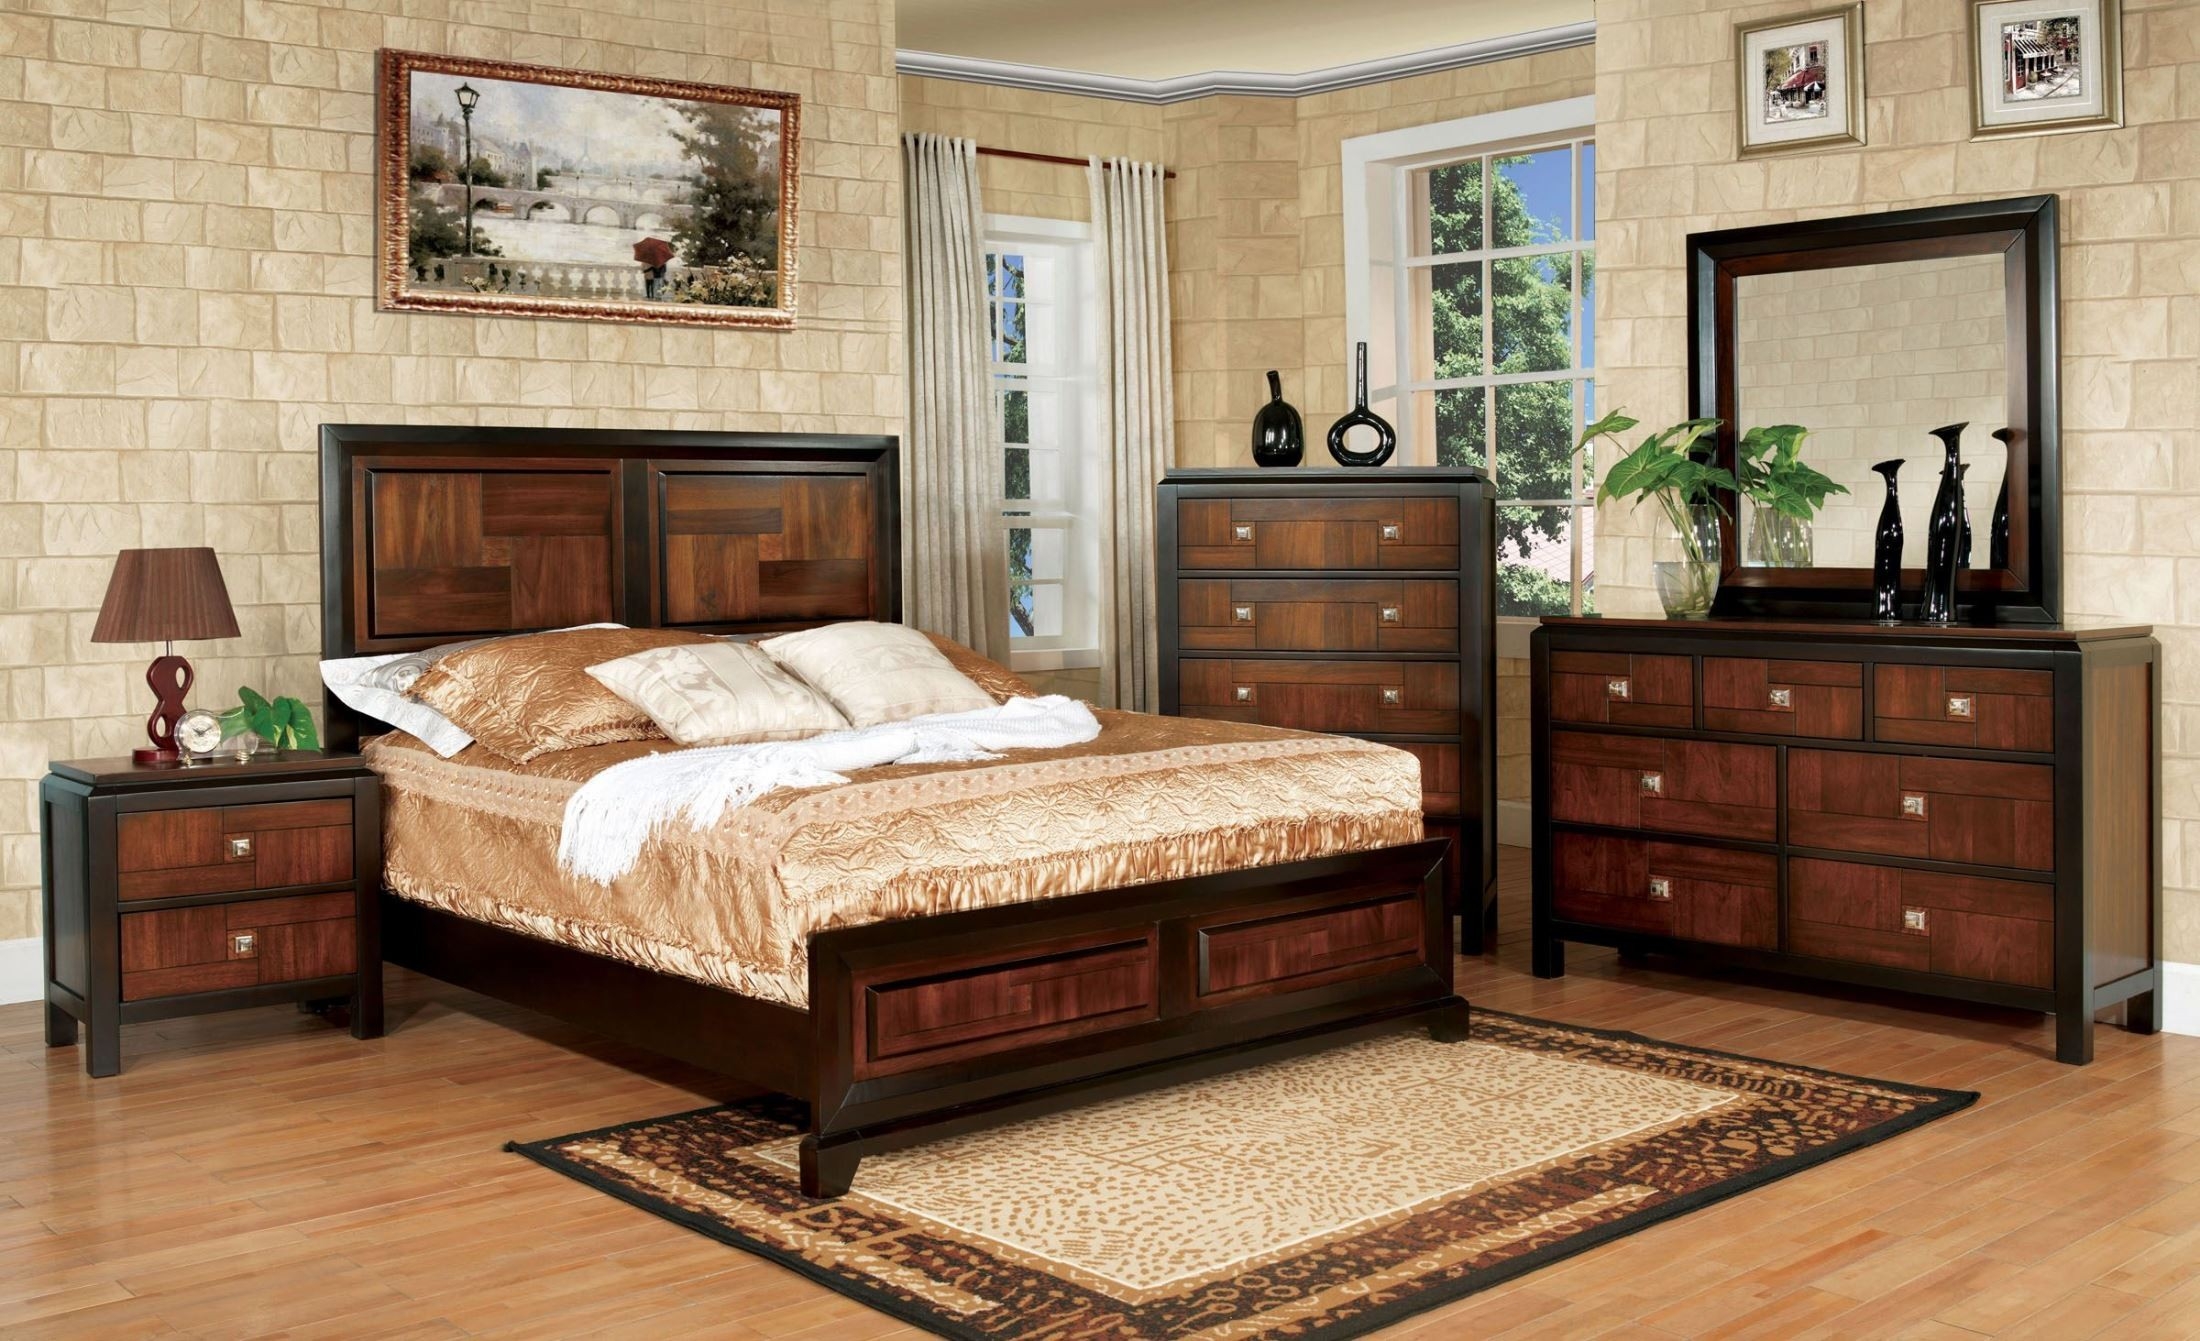 oriental bedroom furniture sey